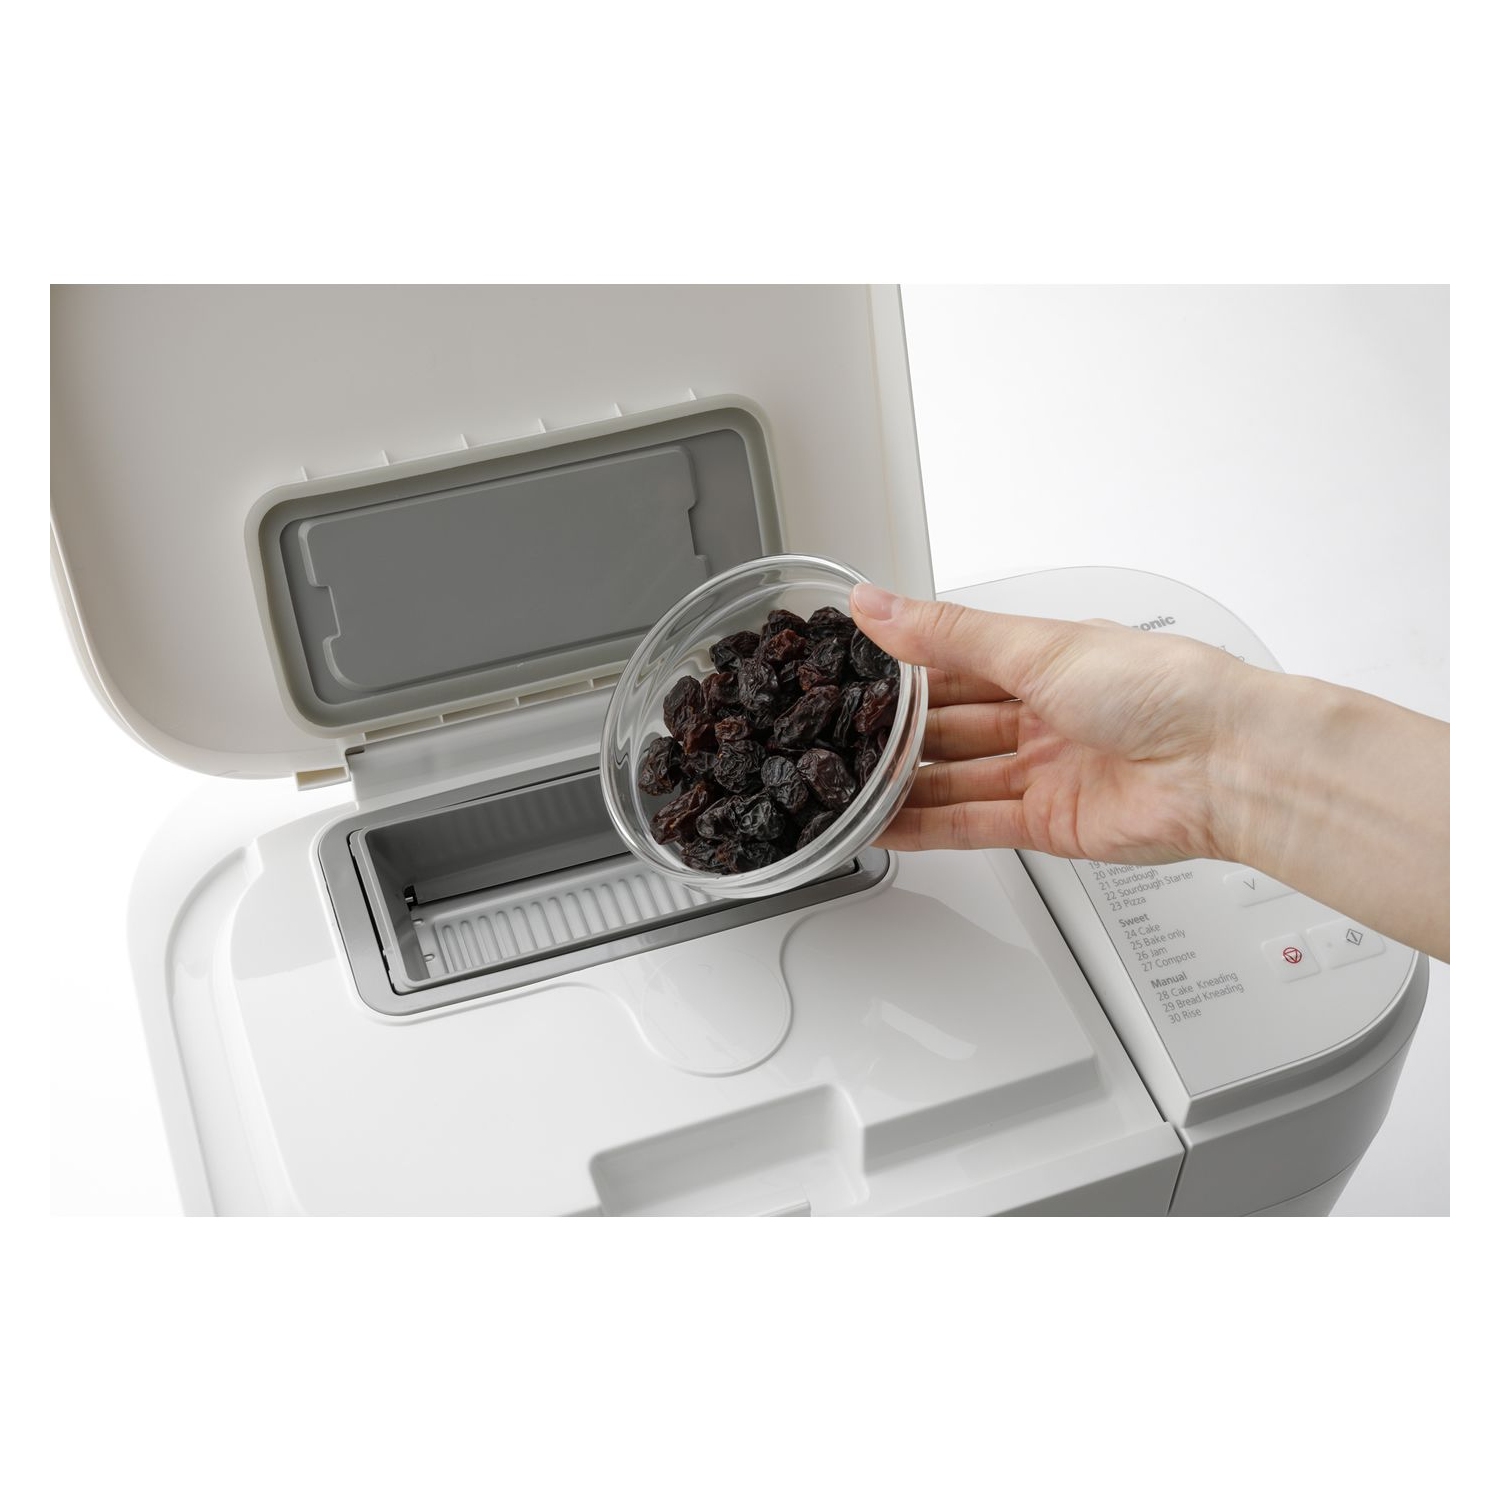 Panasonic Automatic Breadmaker With Raisin & Nut Dispenser (white) - 2